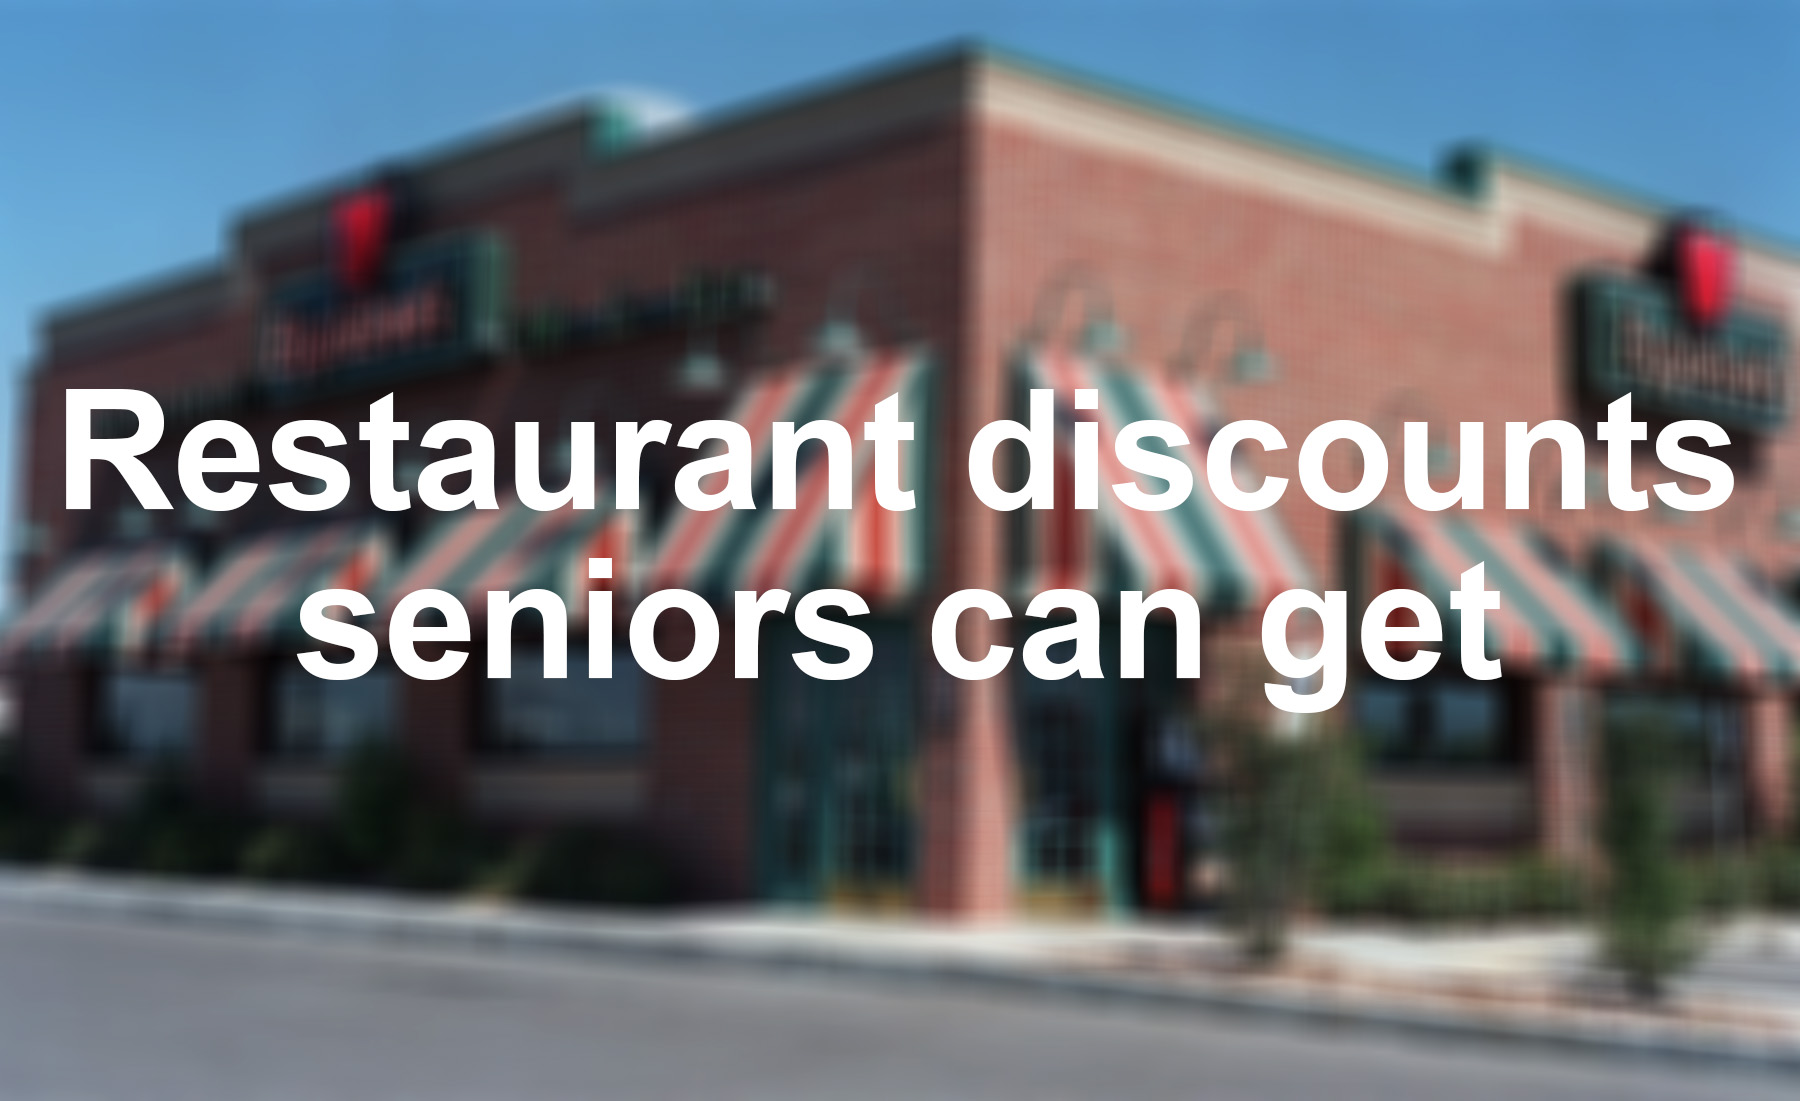 Restaurants senior discounts